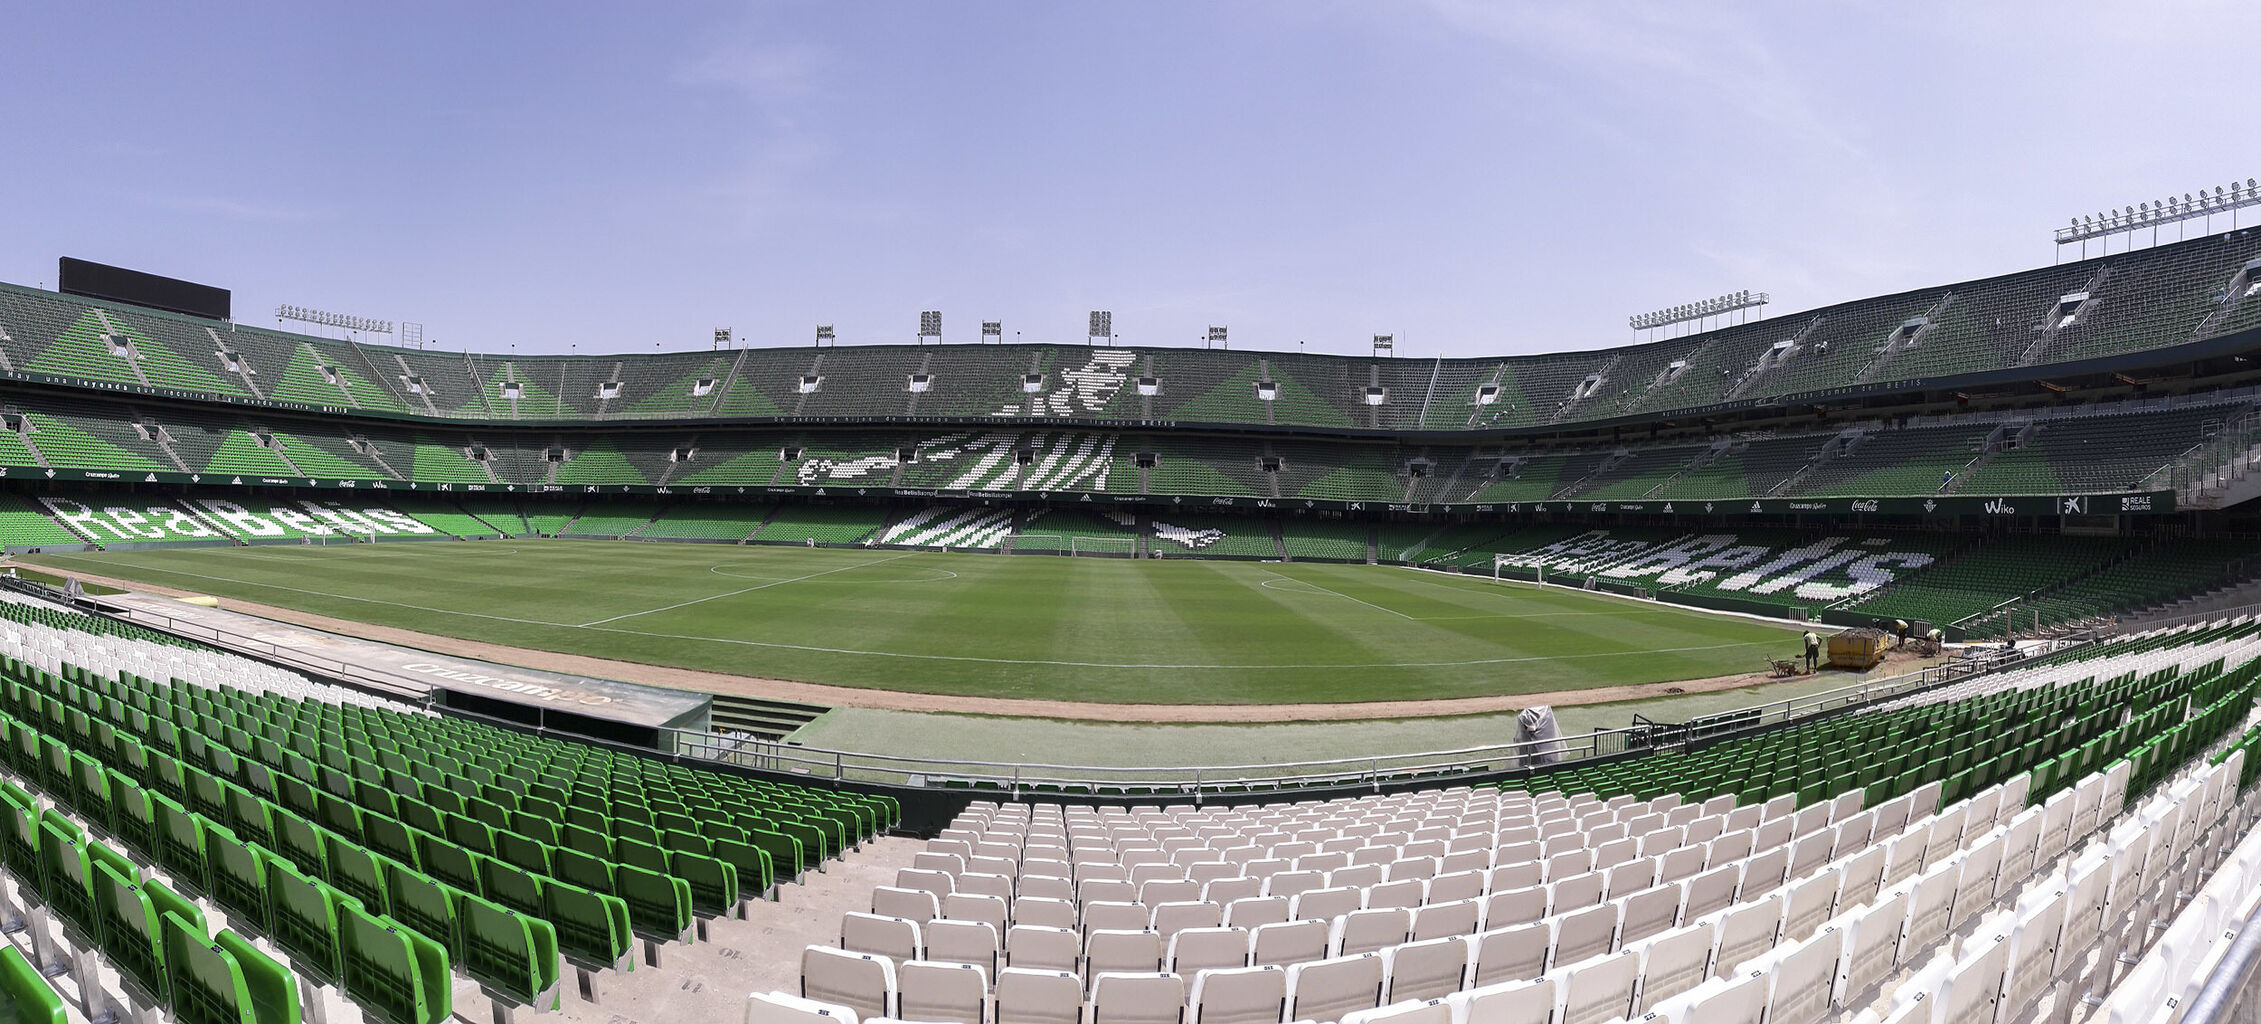 Estadio Benito Villamarín (Real Betis Balompié Stadium) - Spain Traveller